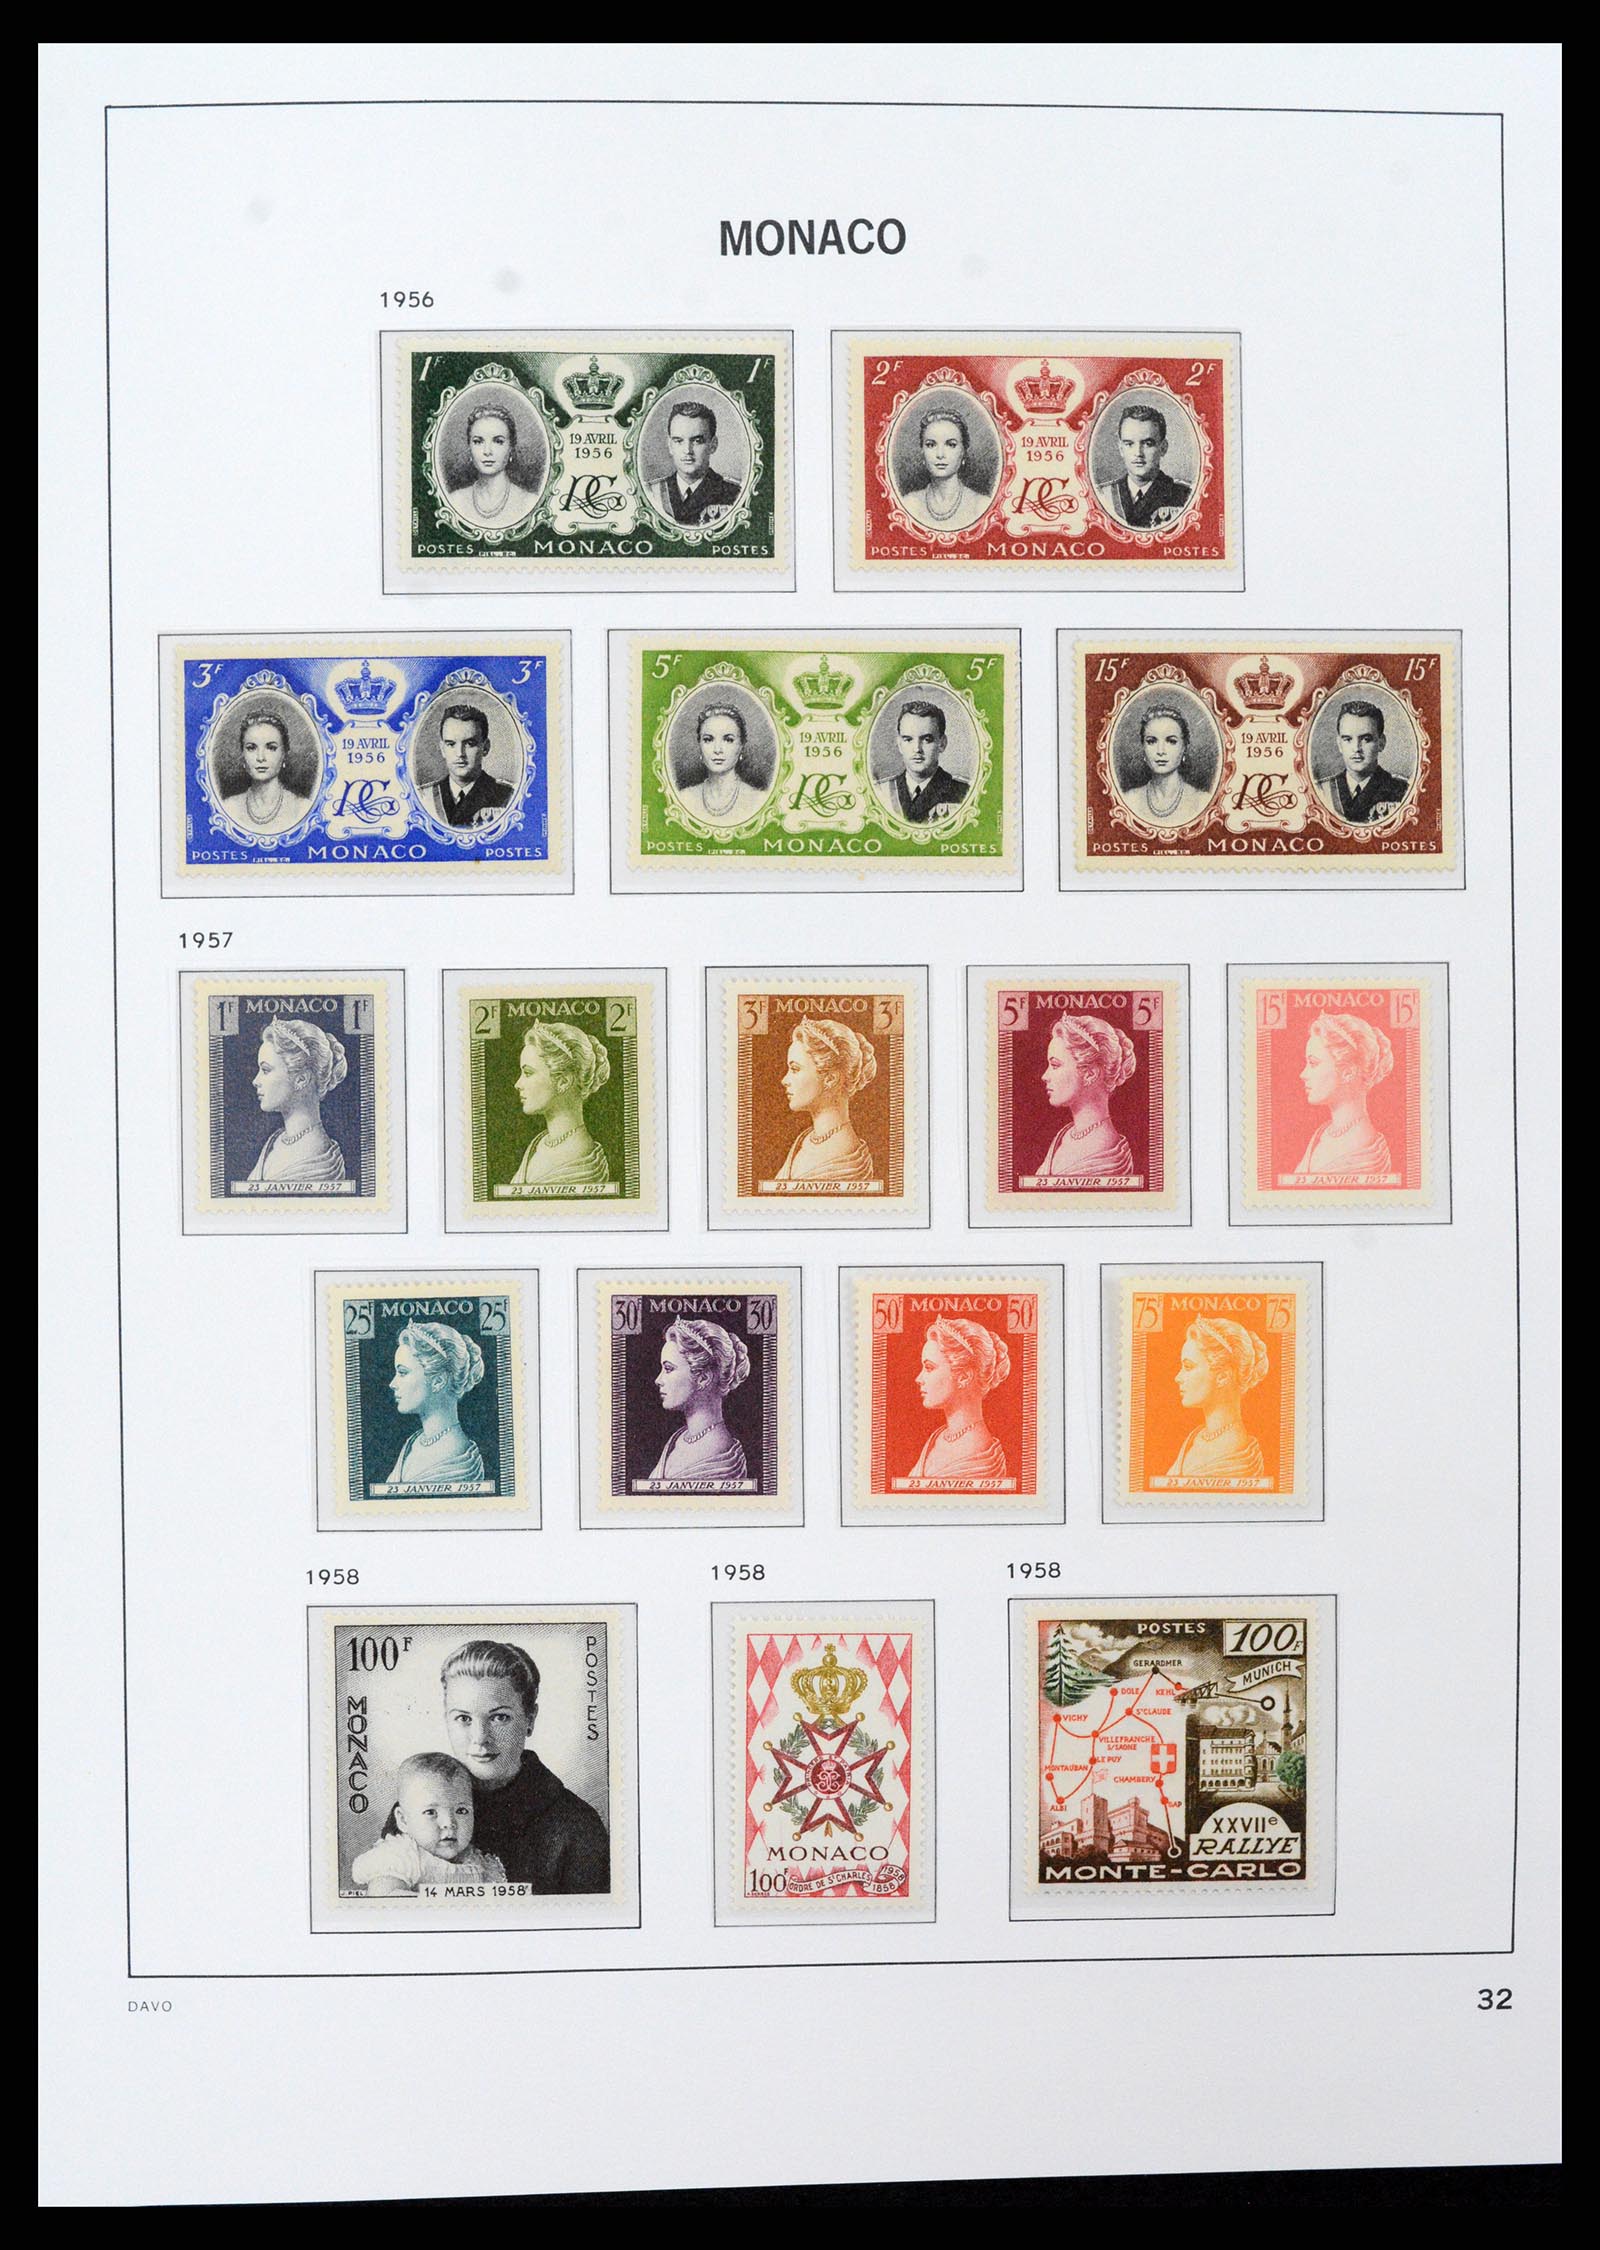 37279 032 - Stamp collection 37279 Monaco 1885-1969.